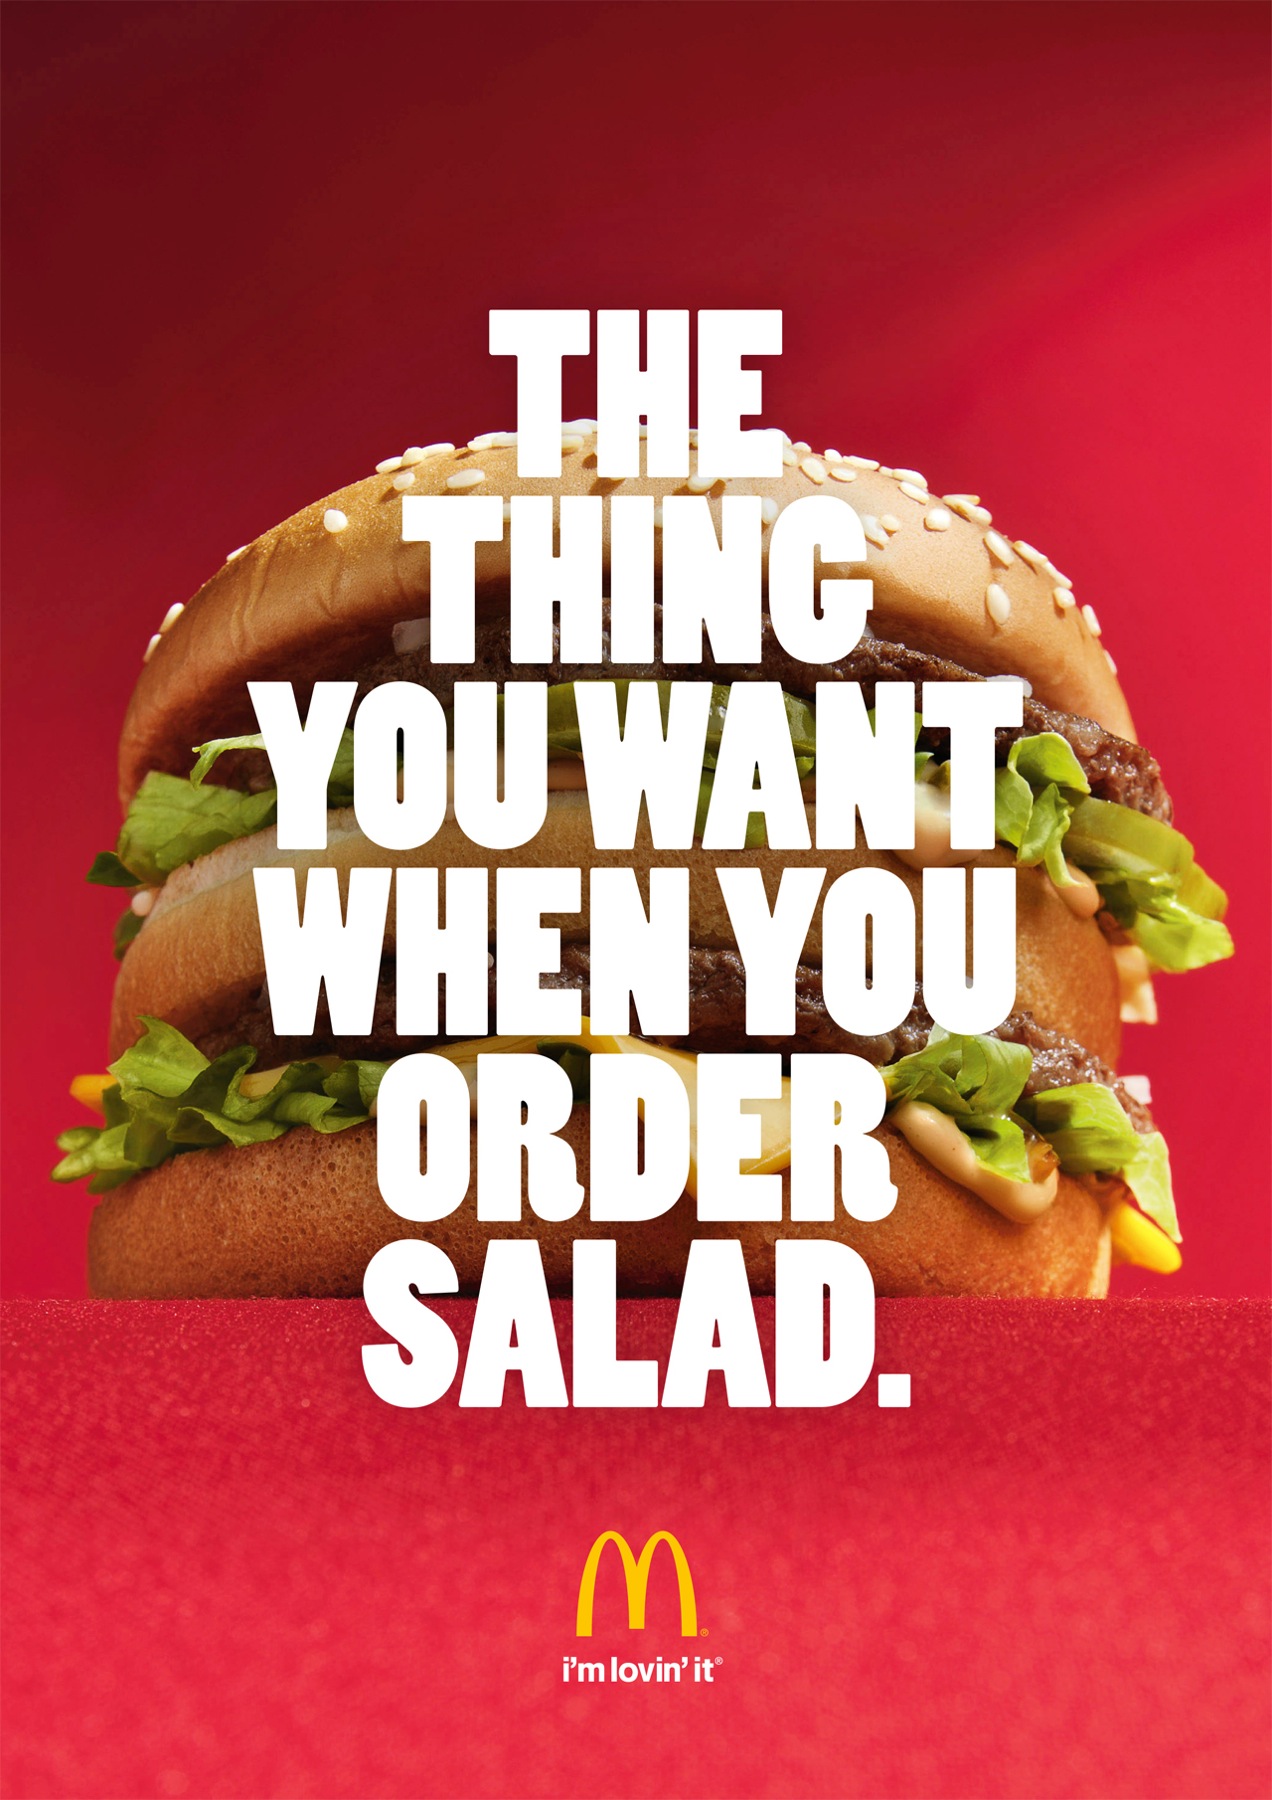 MARKETING Mcdonalds | print salad ad IDEAS GR8